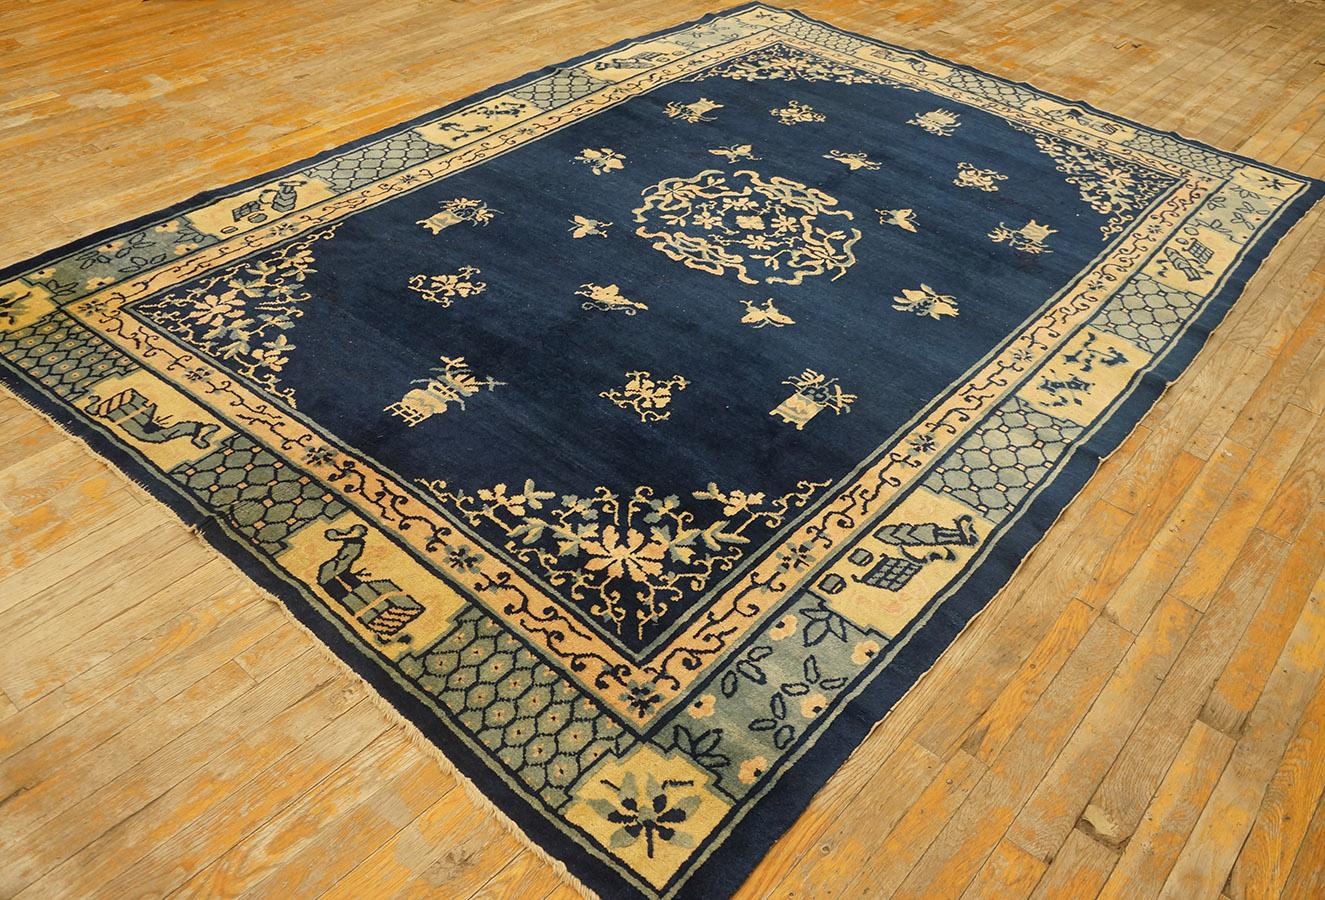 Antique Chinese Peking rug measures: 6' 0'' x 8' 6''.